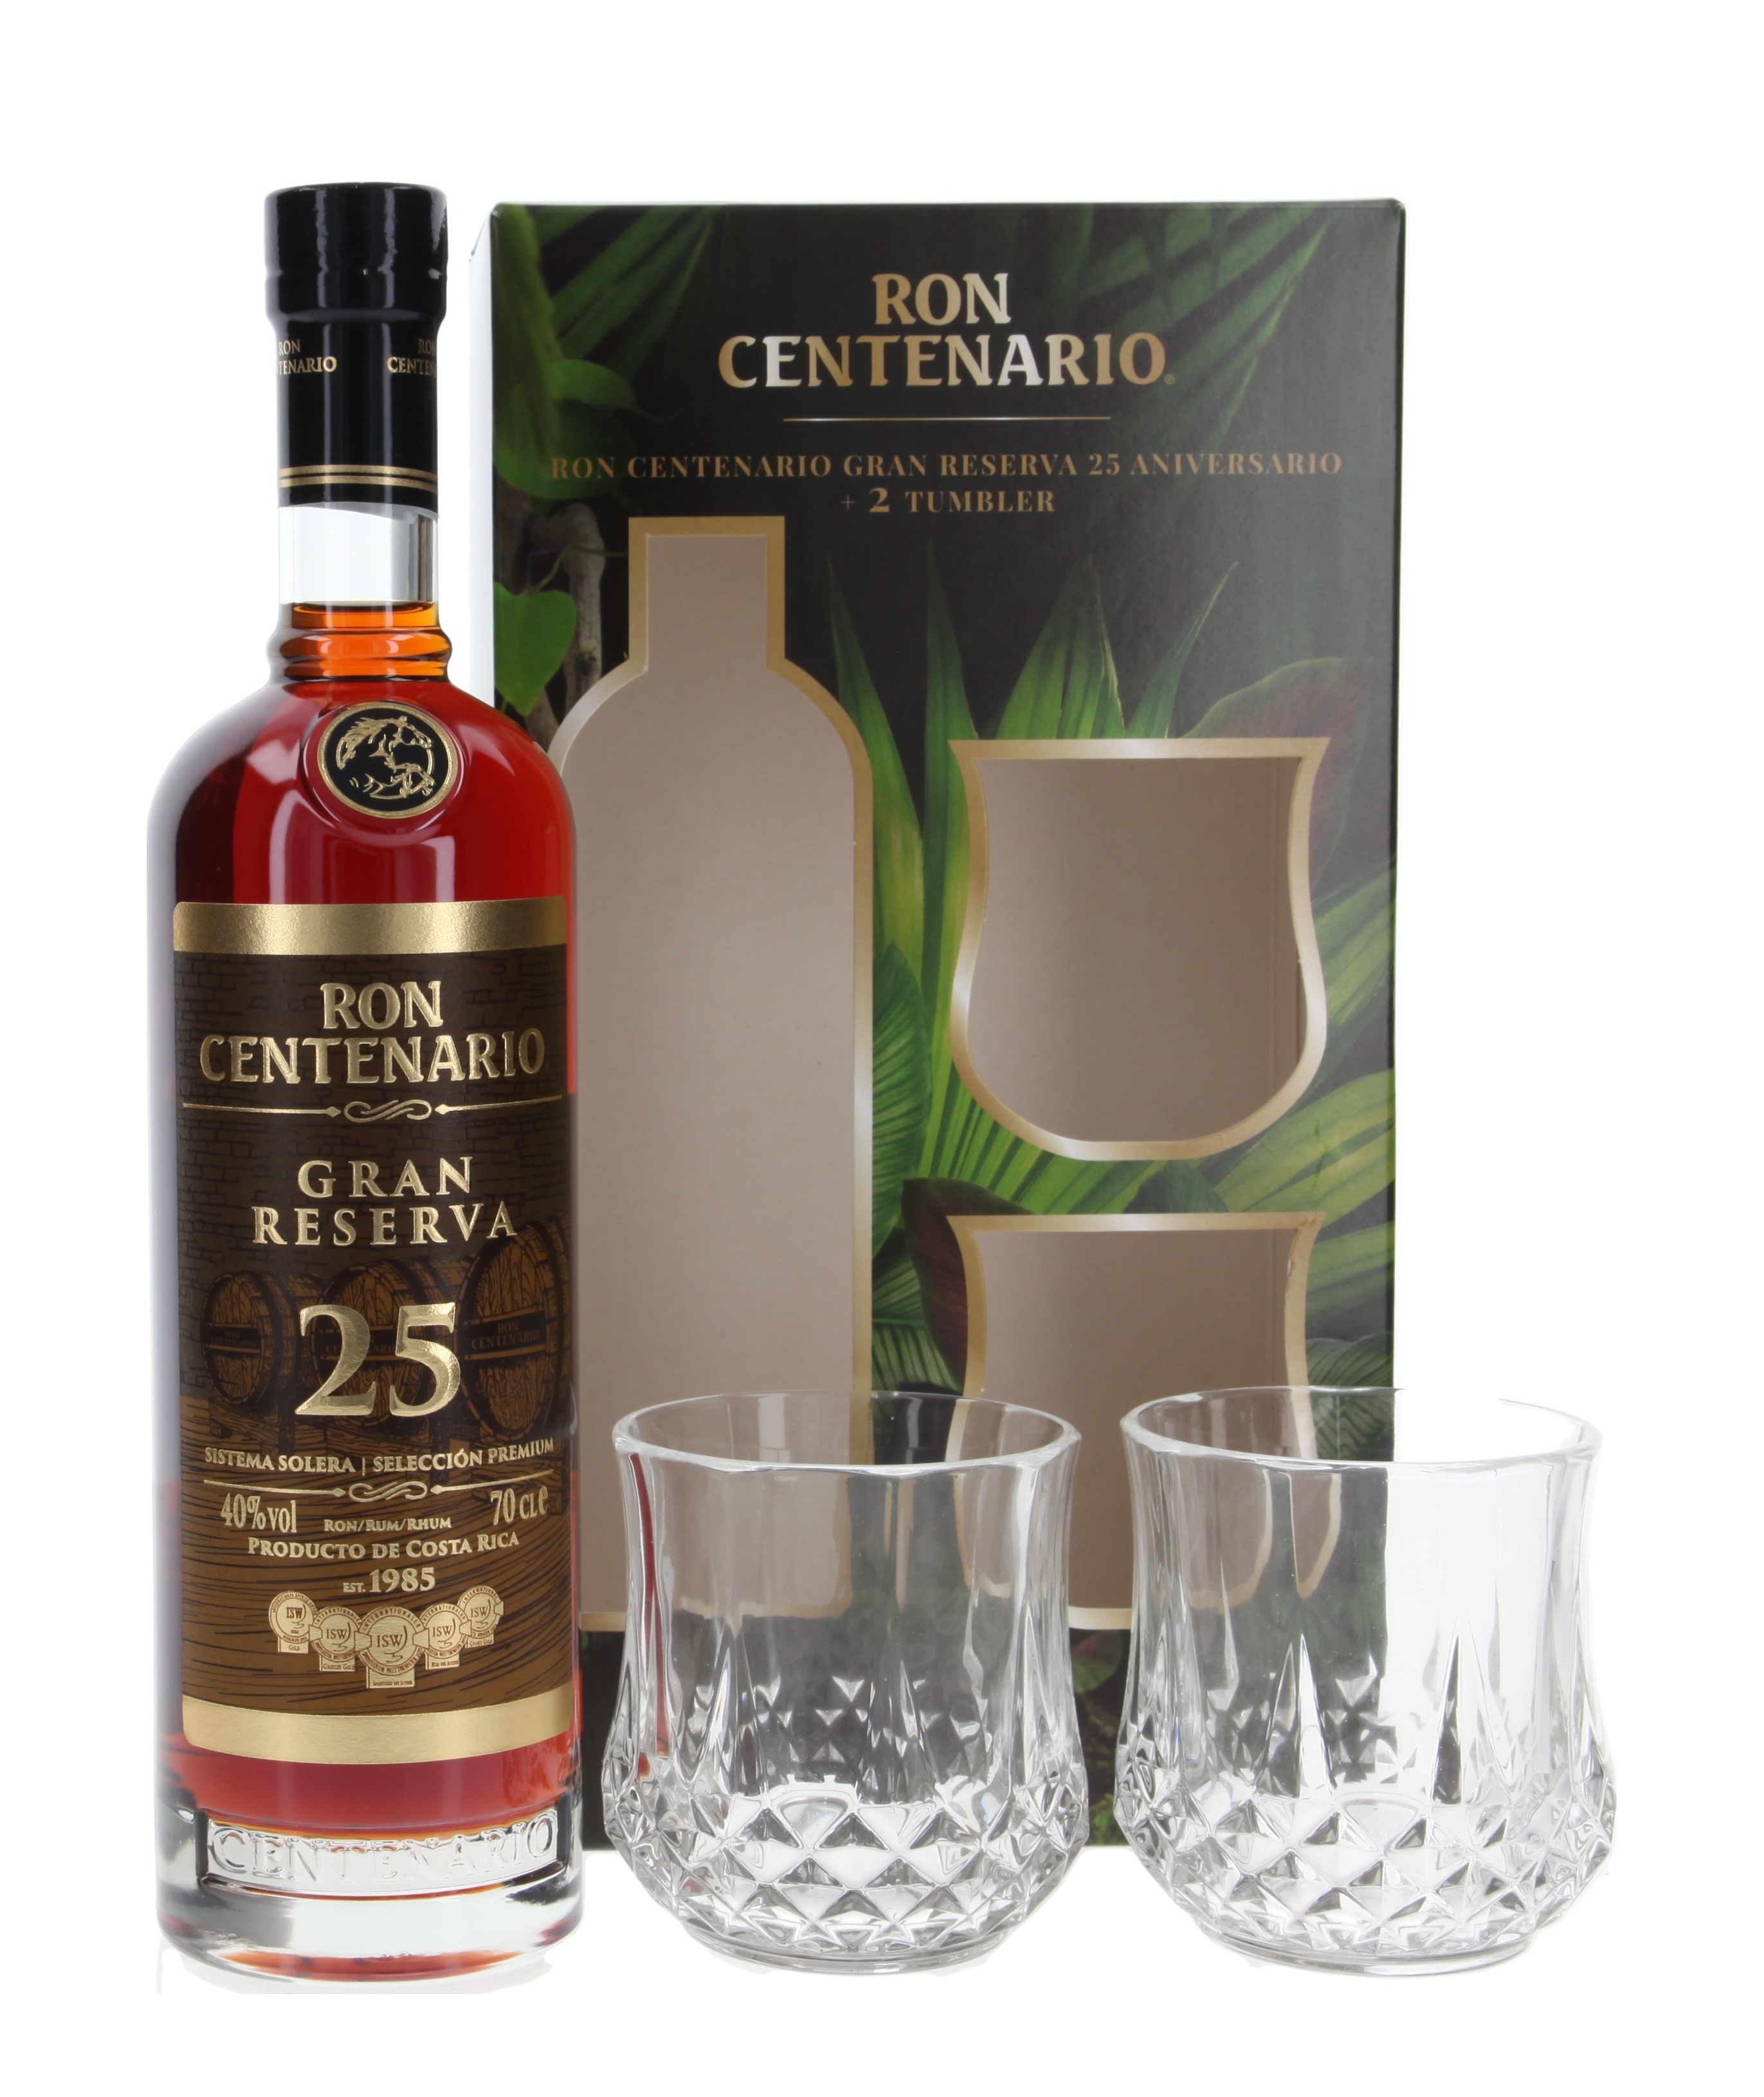 Online-Shop 2 Centenario » Whisky.de mit Aniversario | 25 Gläsern Gran Reserva Zum Ron